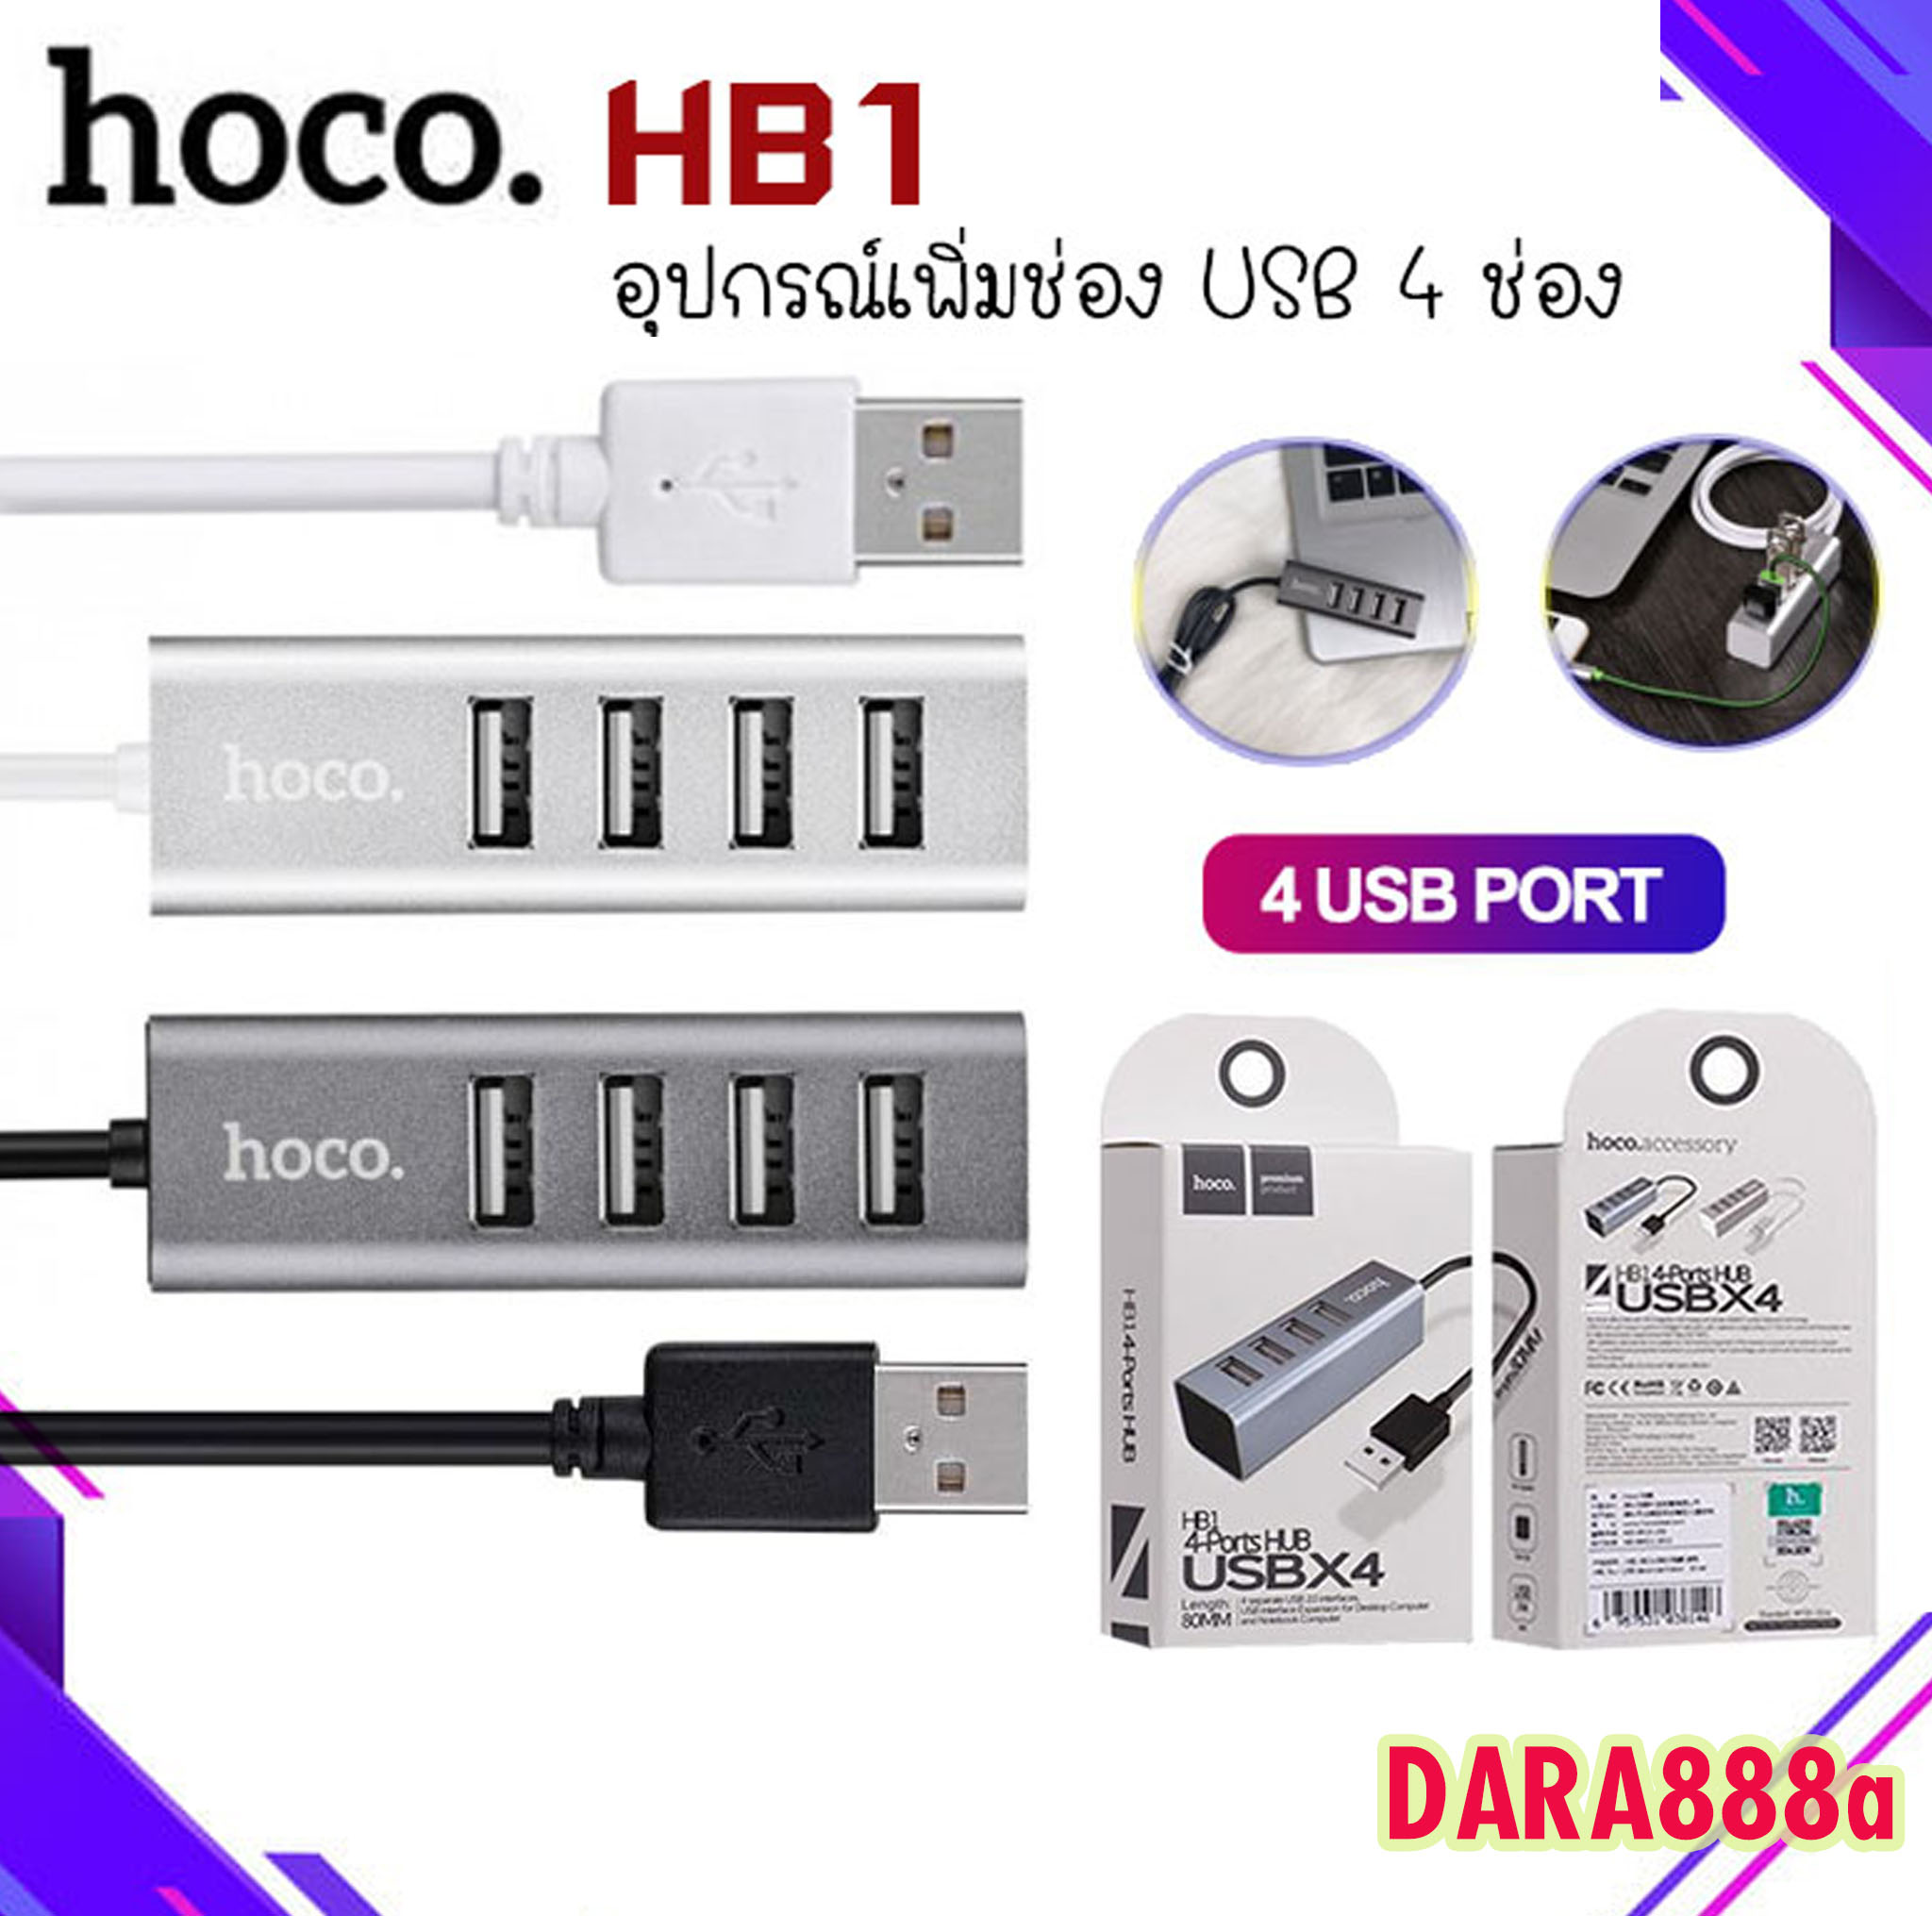 Hoco HB1 Ports HUB ตัวแปลง ที่ชาร์จ เพิ่มช่อง อุปกรณ์เพิ่มช่อง USB ใช้งานง่าย สินค้าของแท้100% dara888a